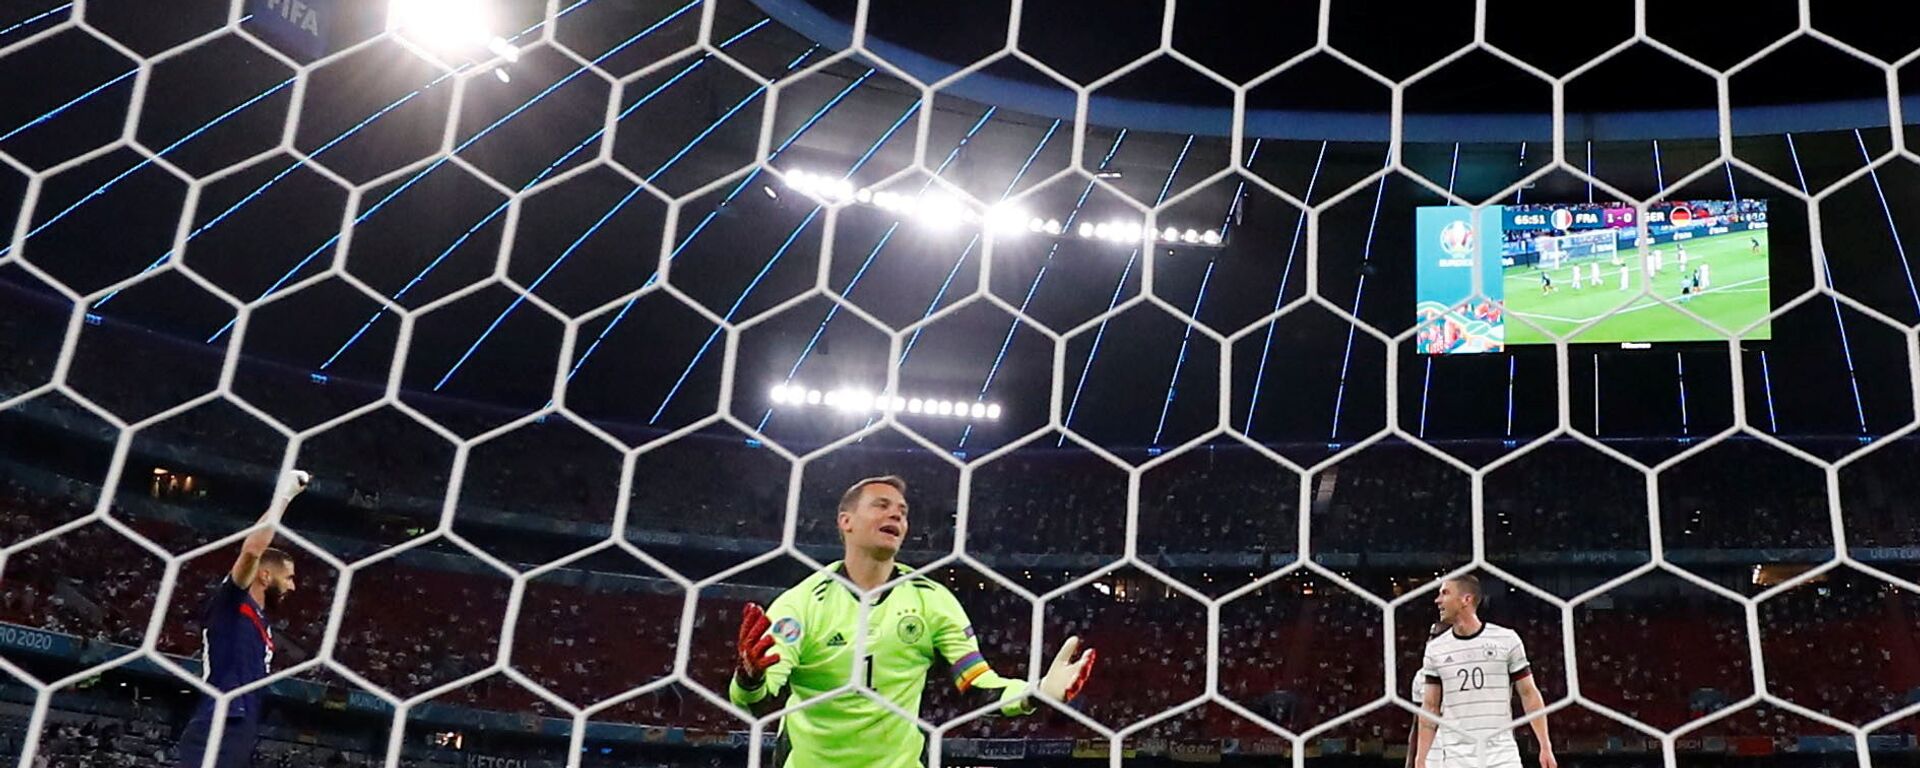 مانوئل نویر دروازه بان جرمنی  Germany's Manuel Neuer reacts before a goal scored by France's Kylian Mbappe is disallowed for offside, June 15, 2021 - اسپوتنیک افغانستان  , 1920, 21.06.2021